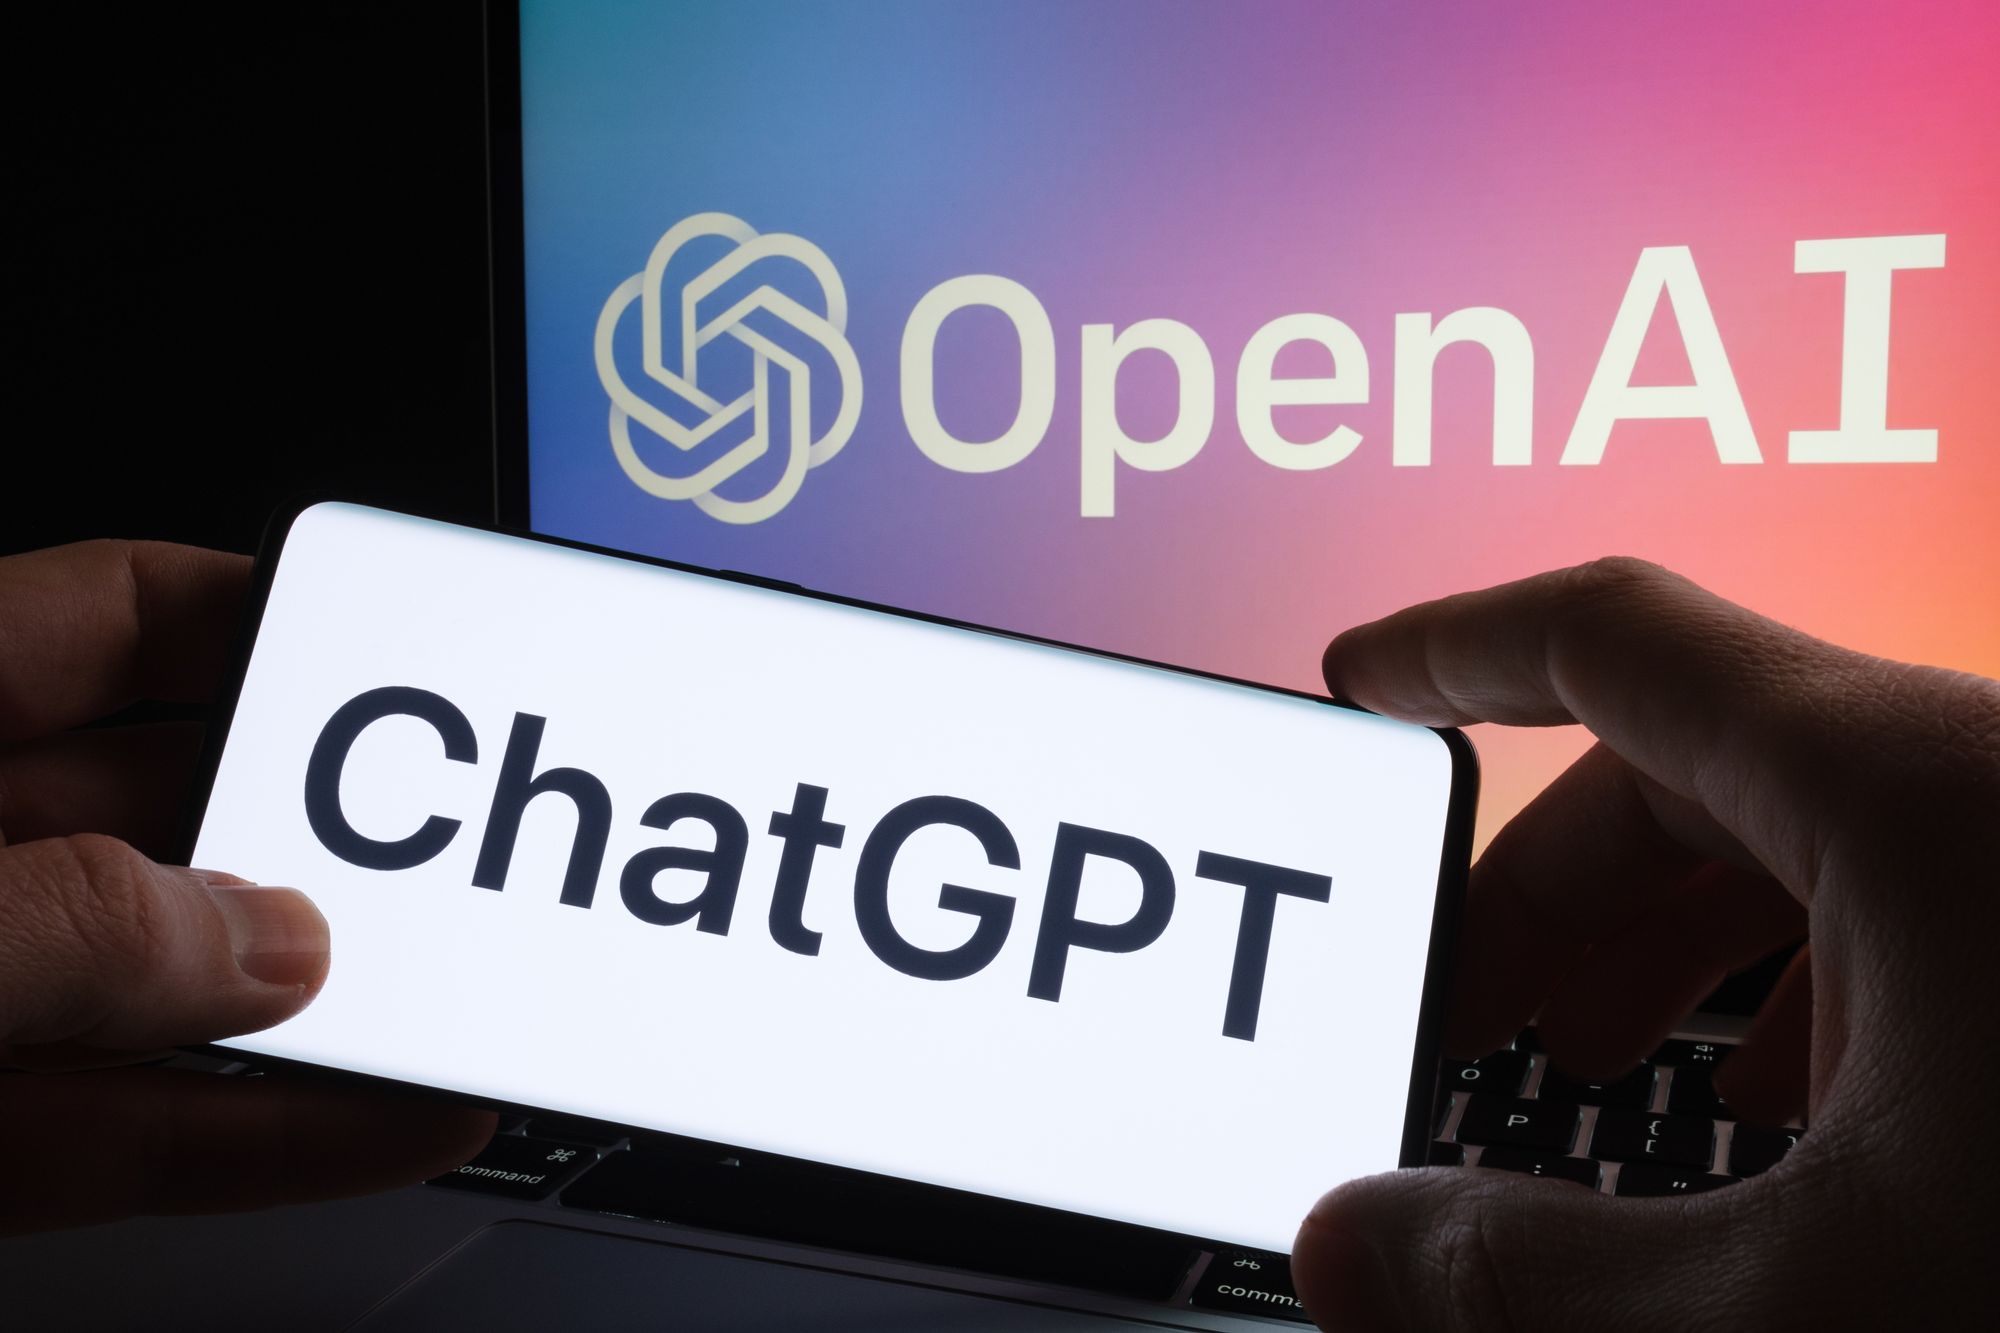 ChatGPT logo seen on smartphone display.